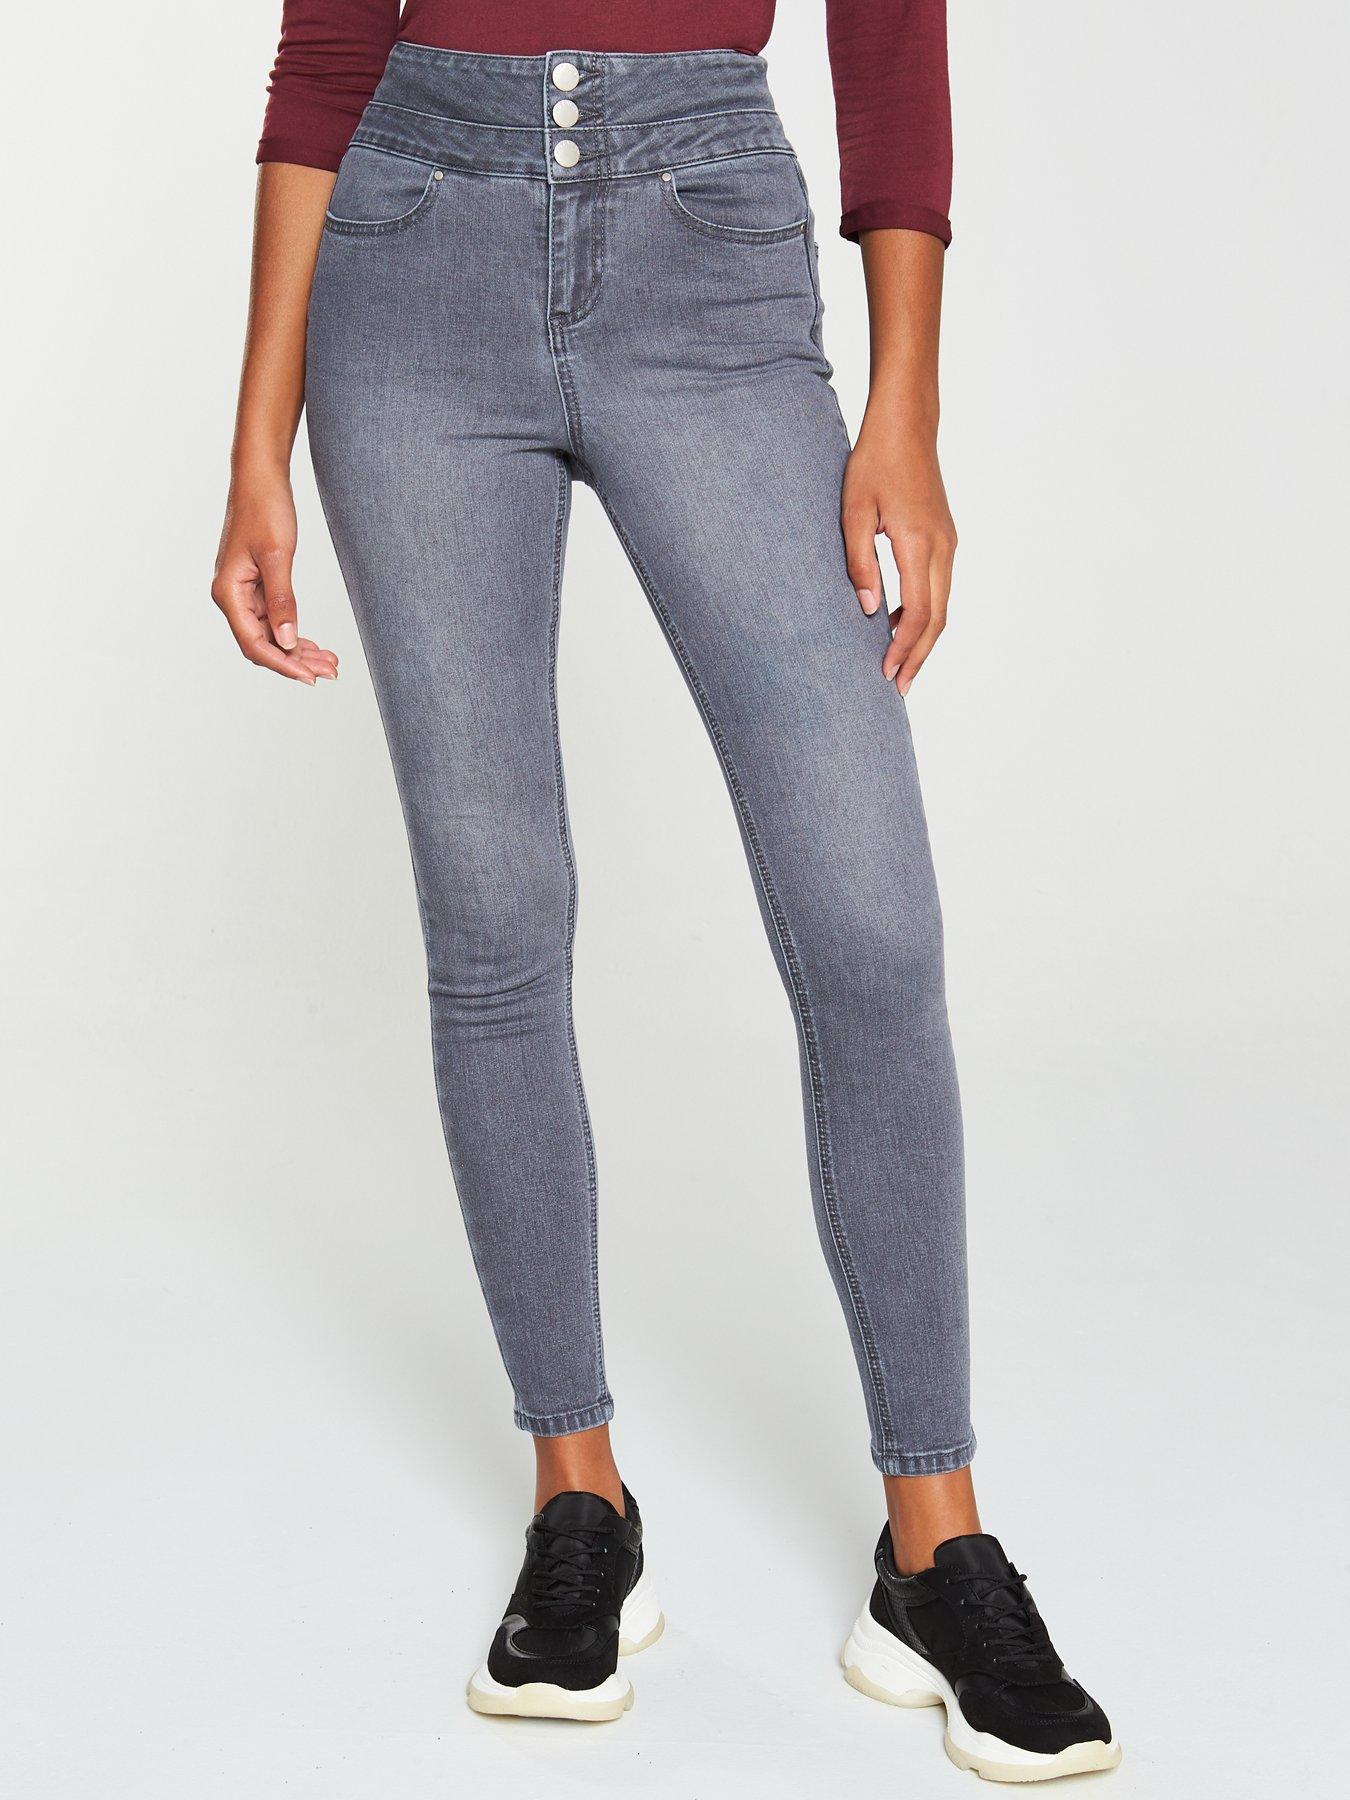 grey jeans womens uk